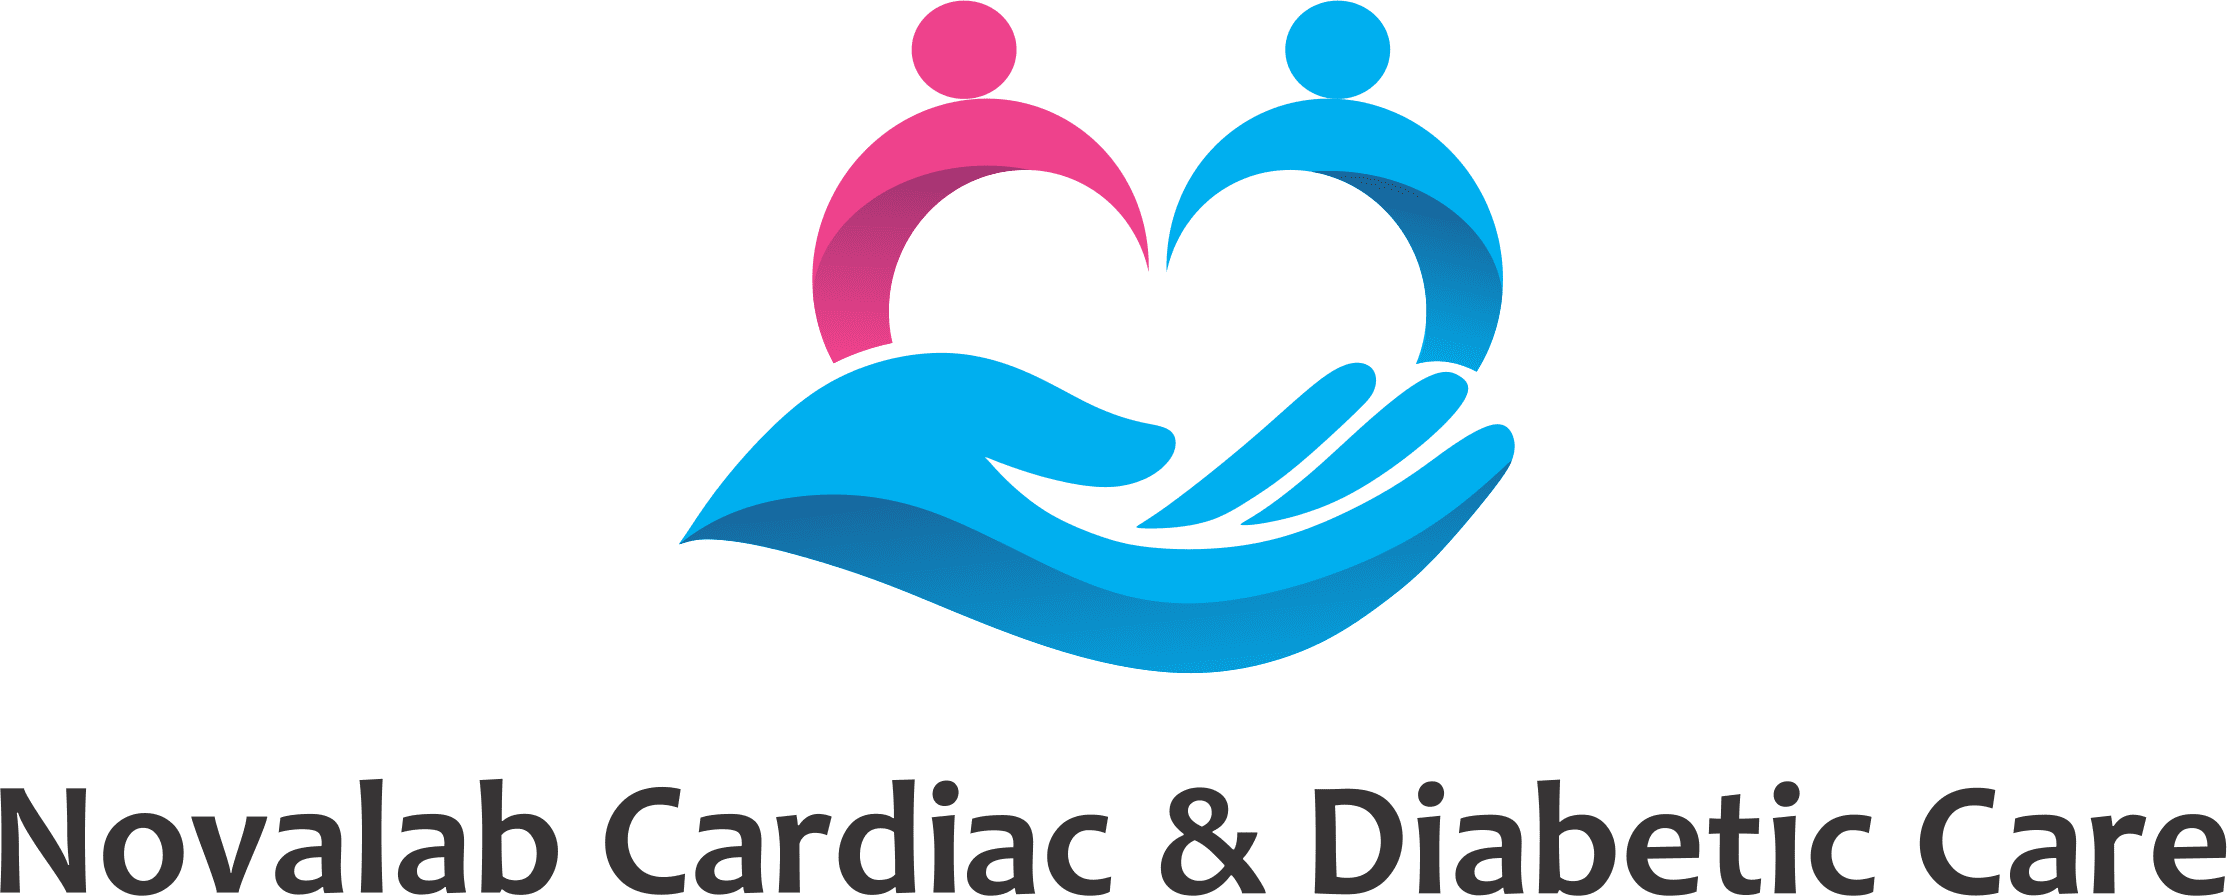 Cardiac logo